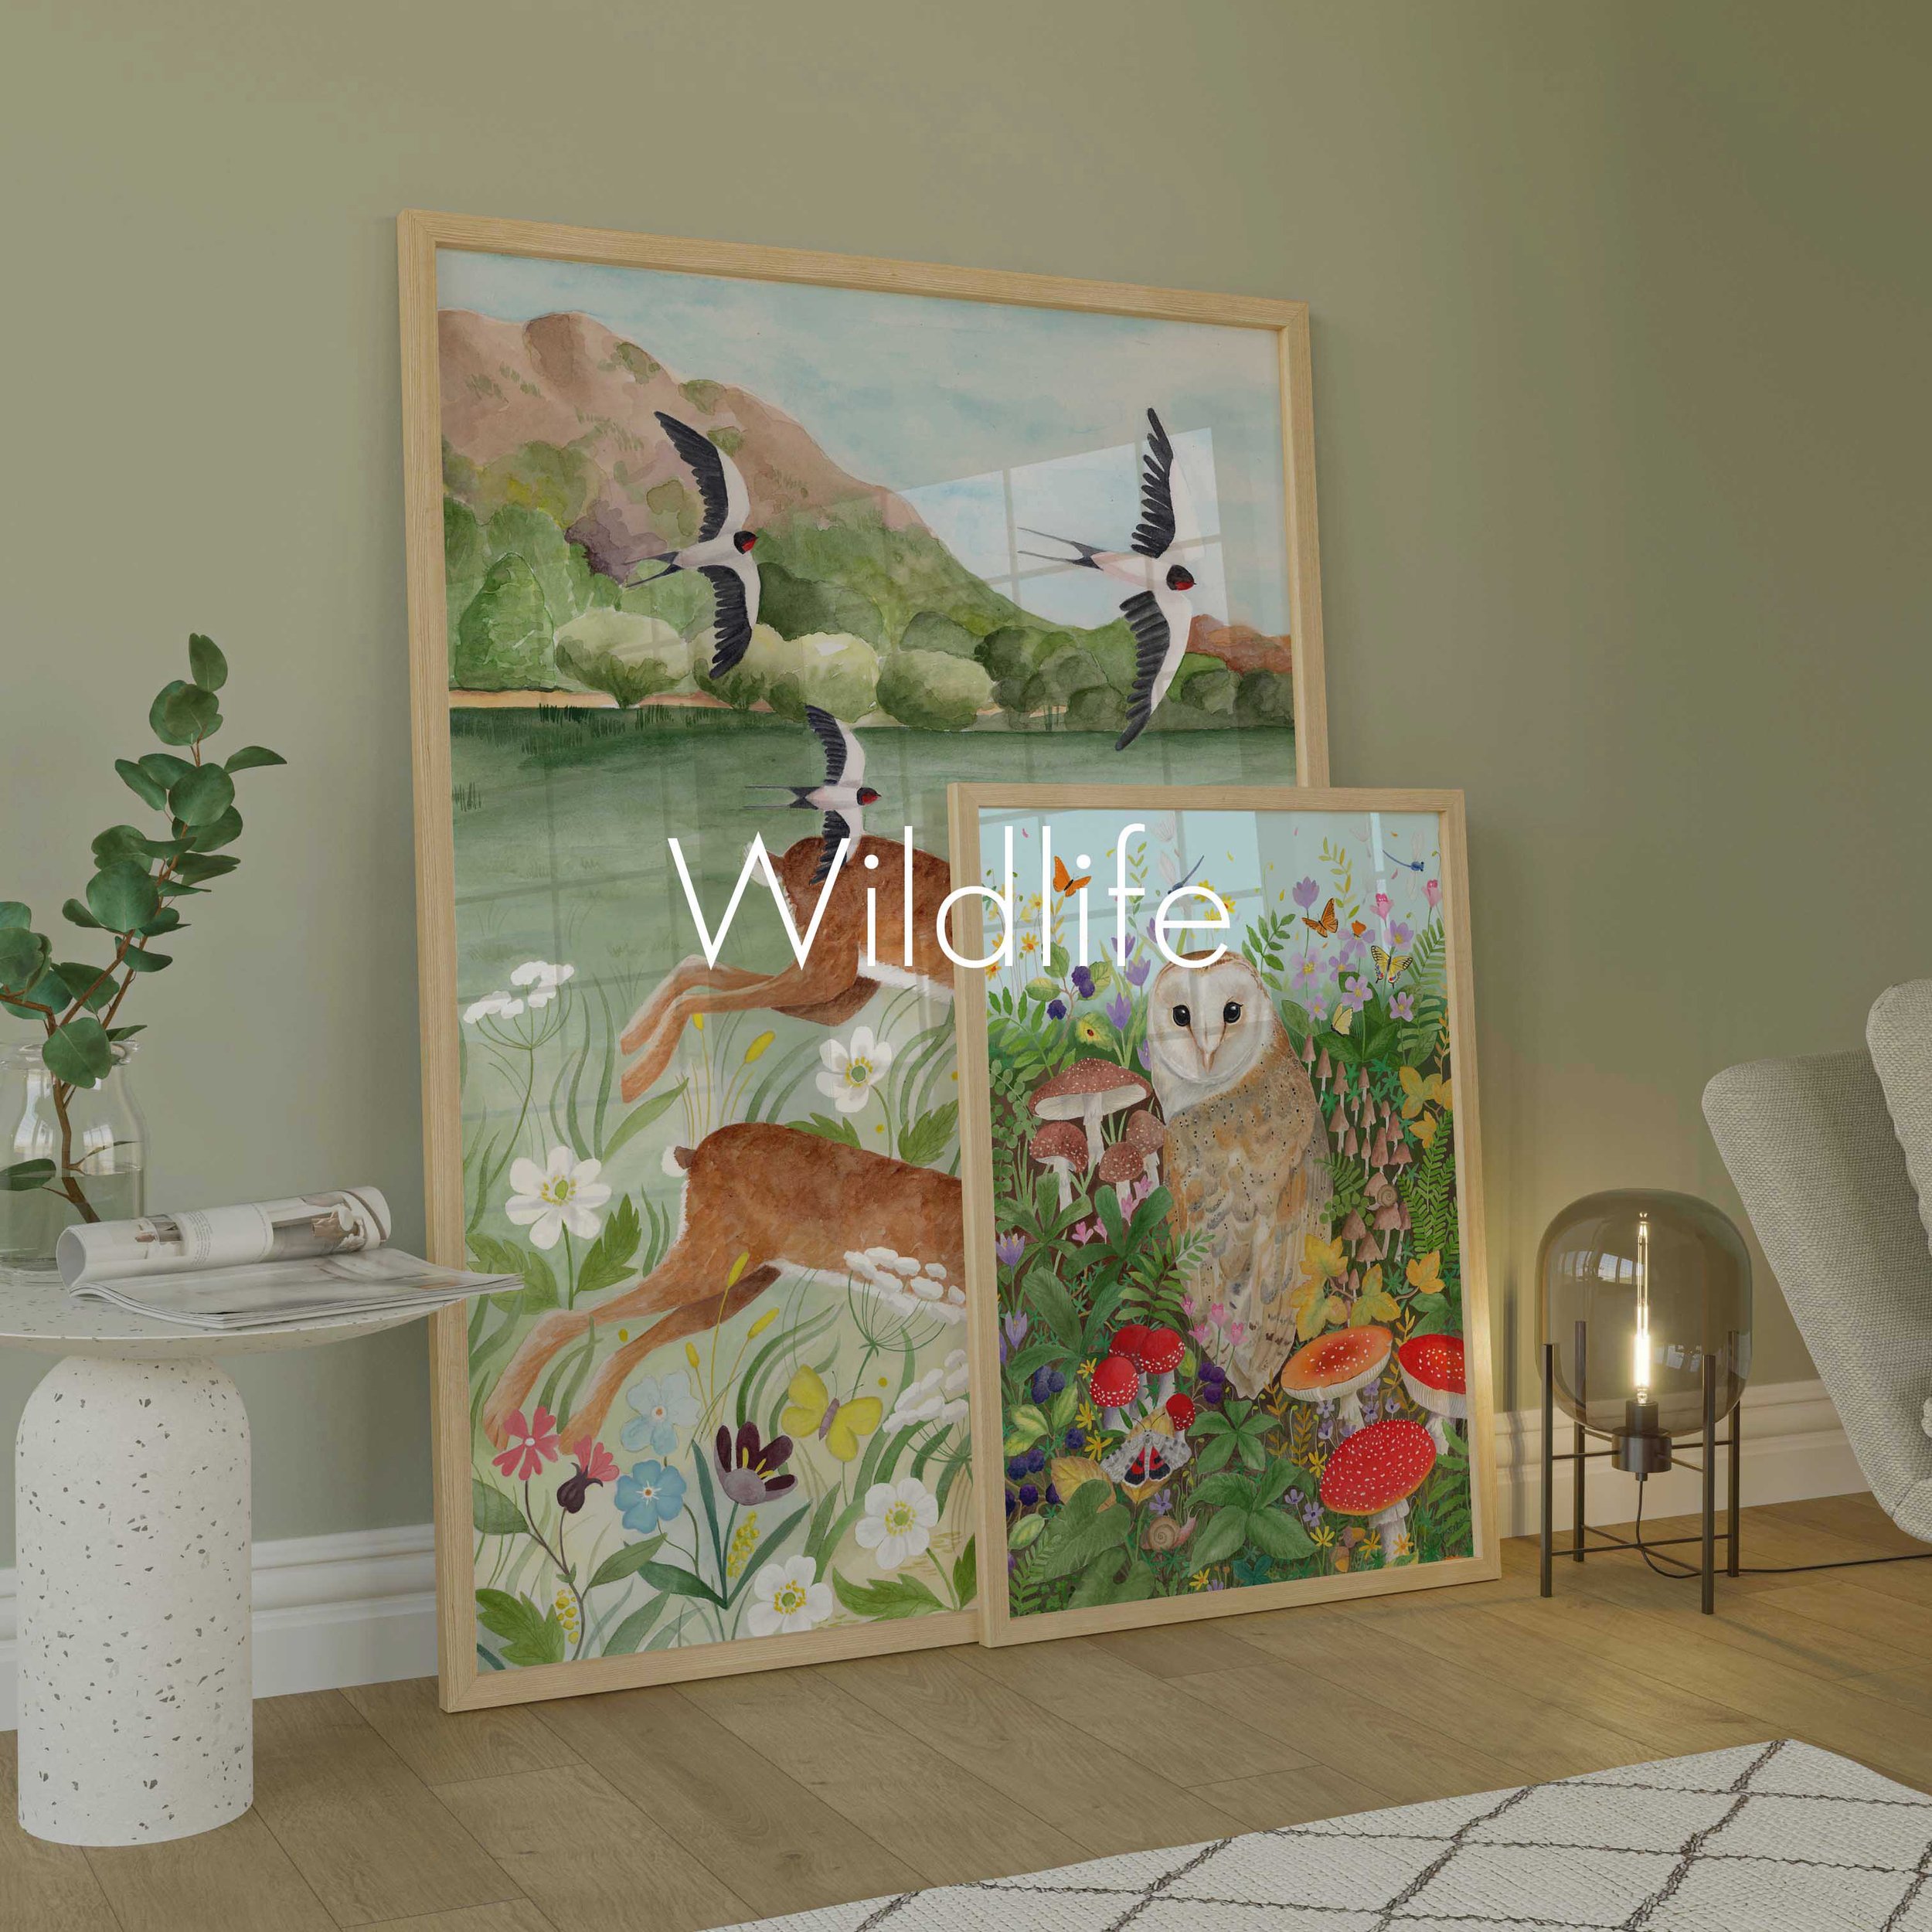 wildlife category text.jpg